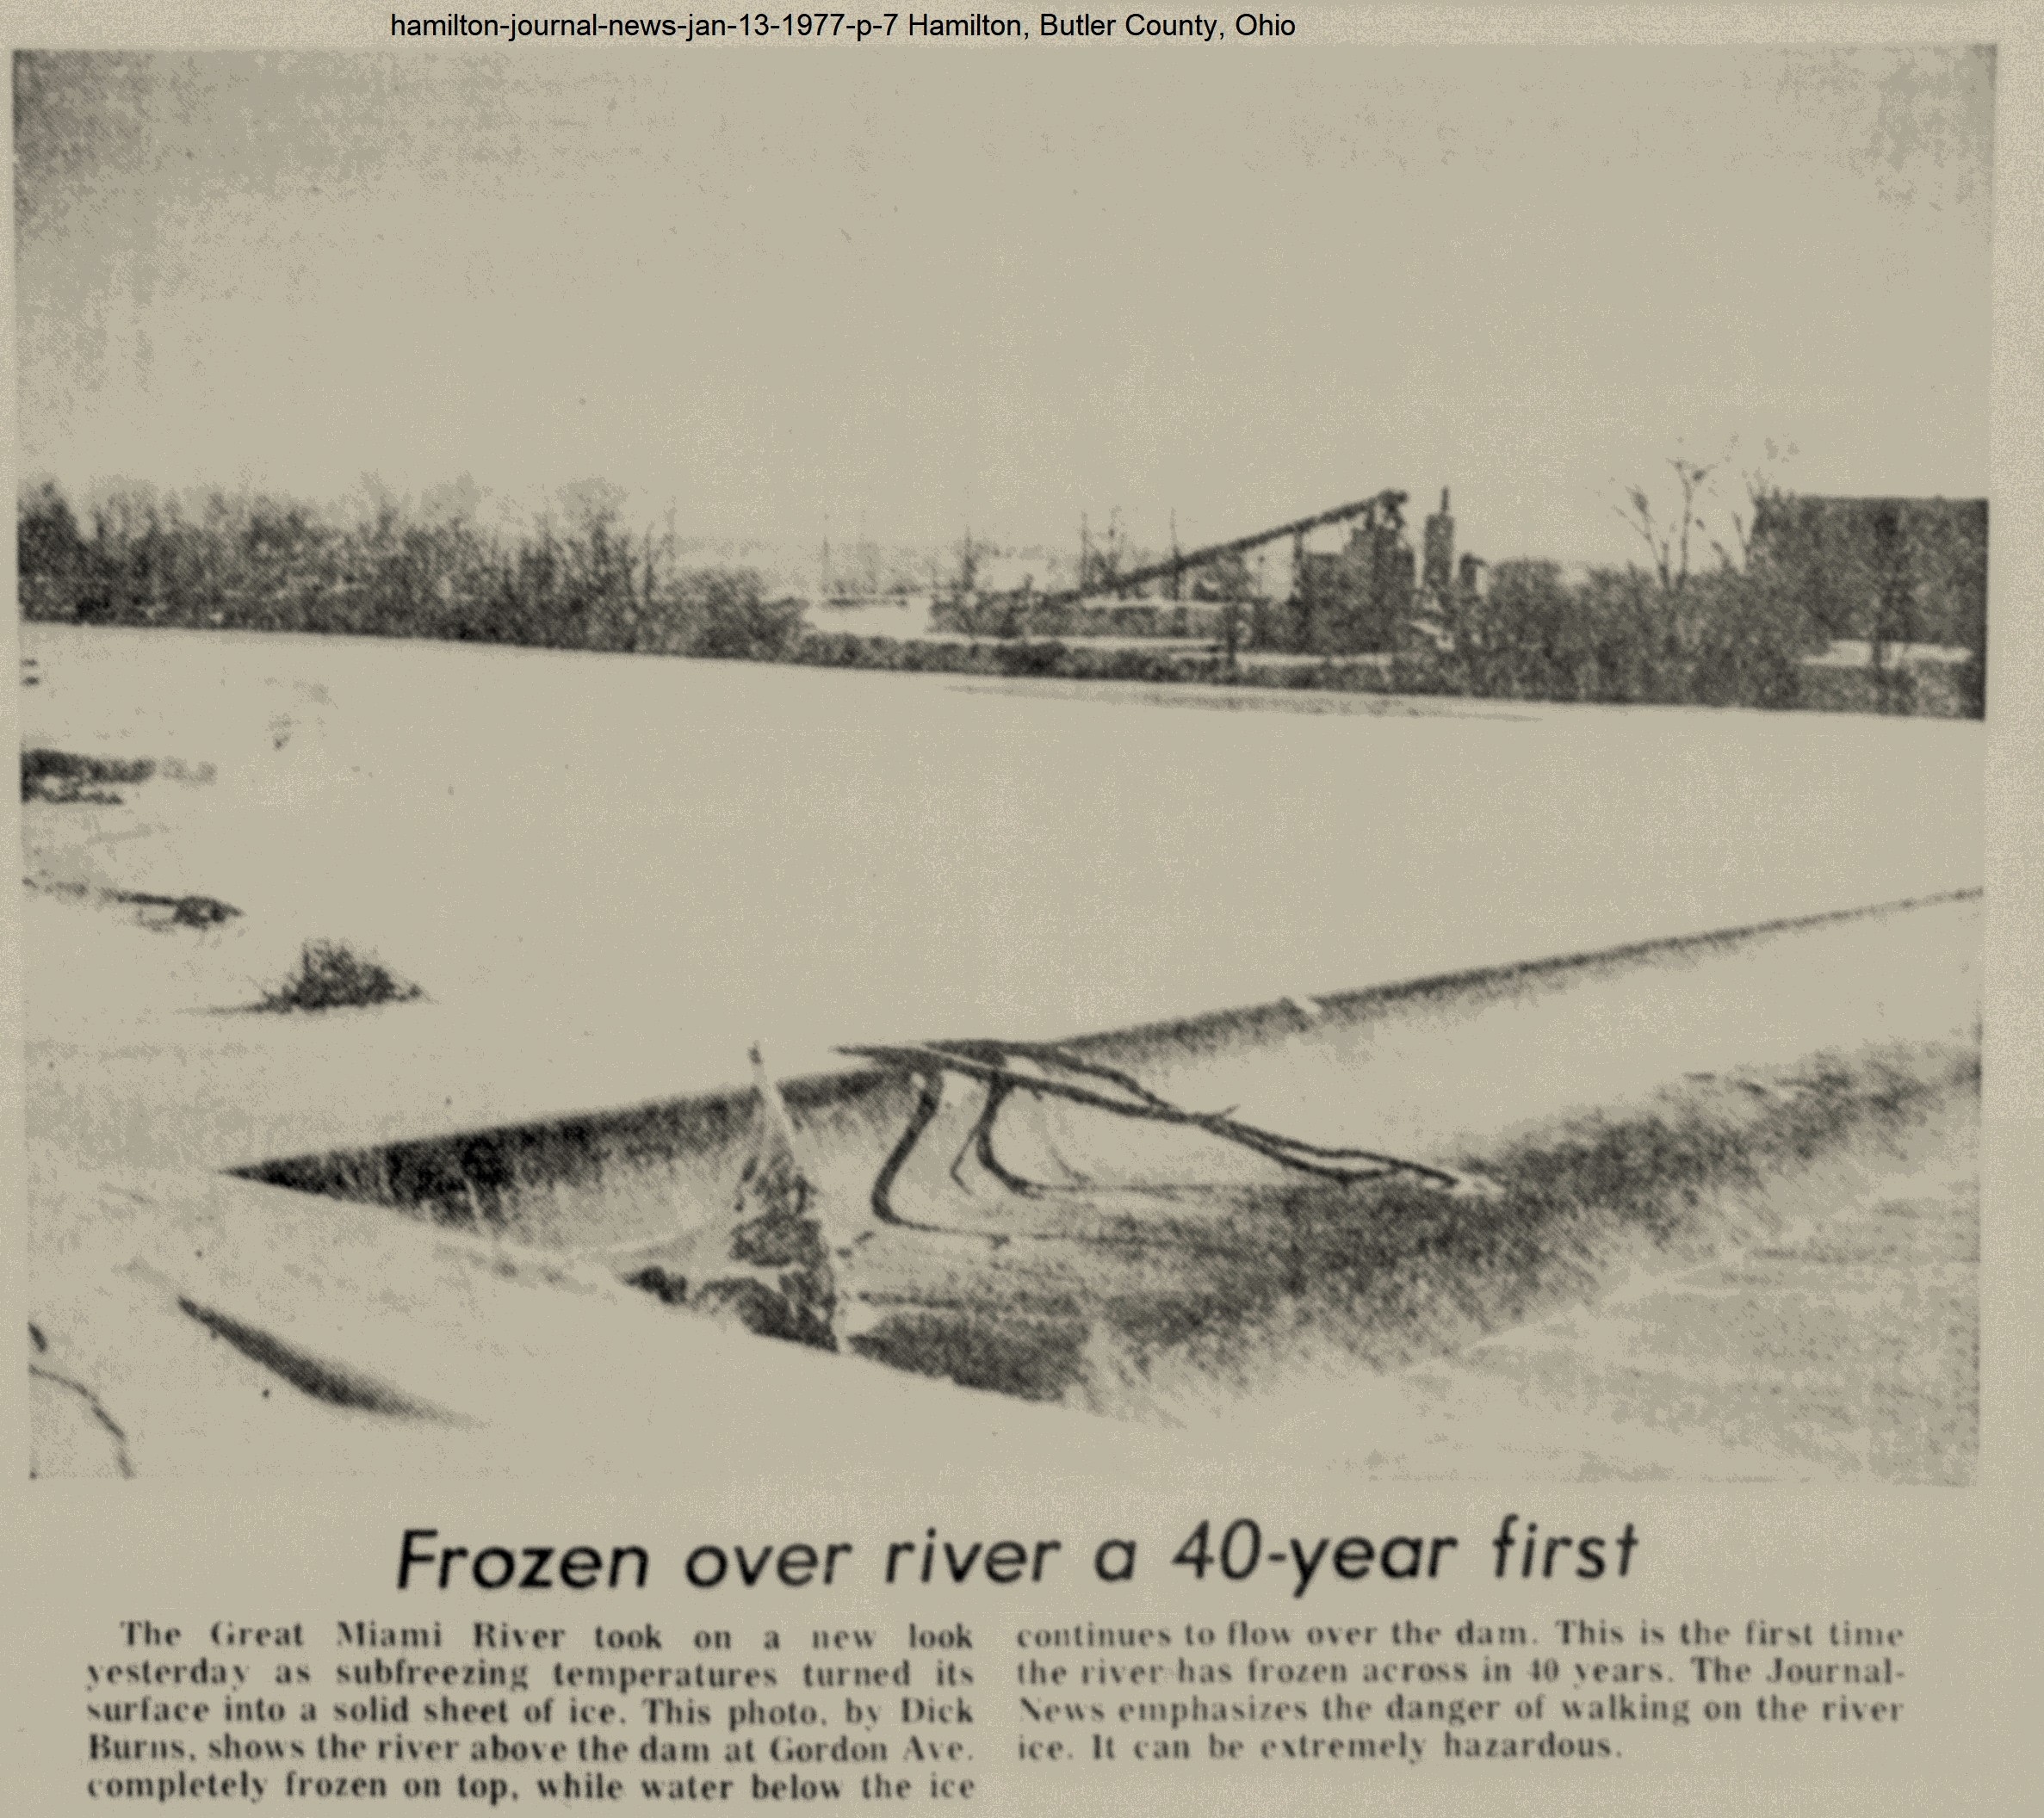 Great Miami River freezes, 1977